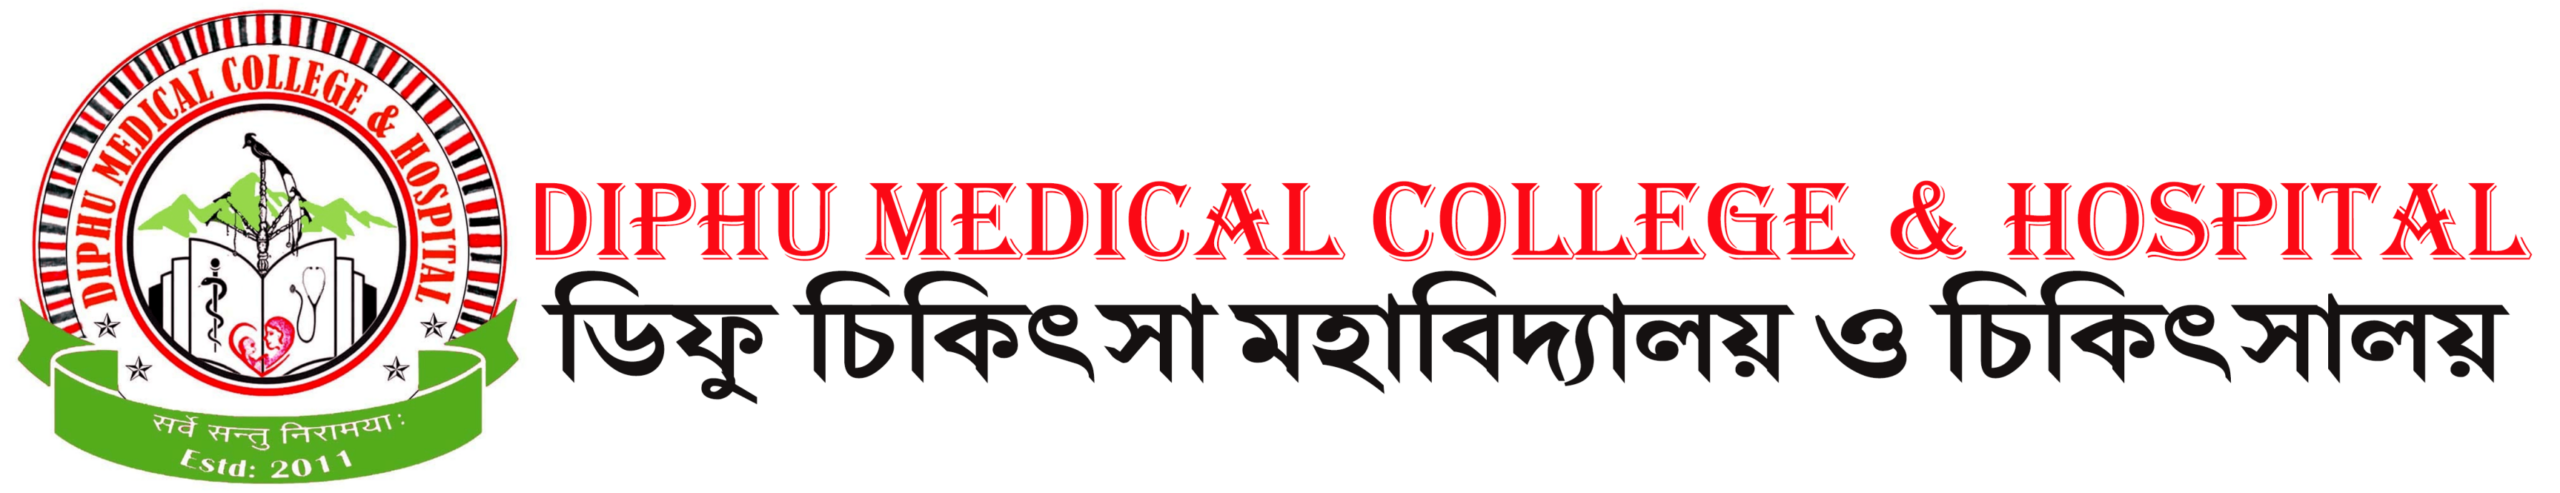 Diphu Medical College & Hospital, Diphu, Assam